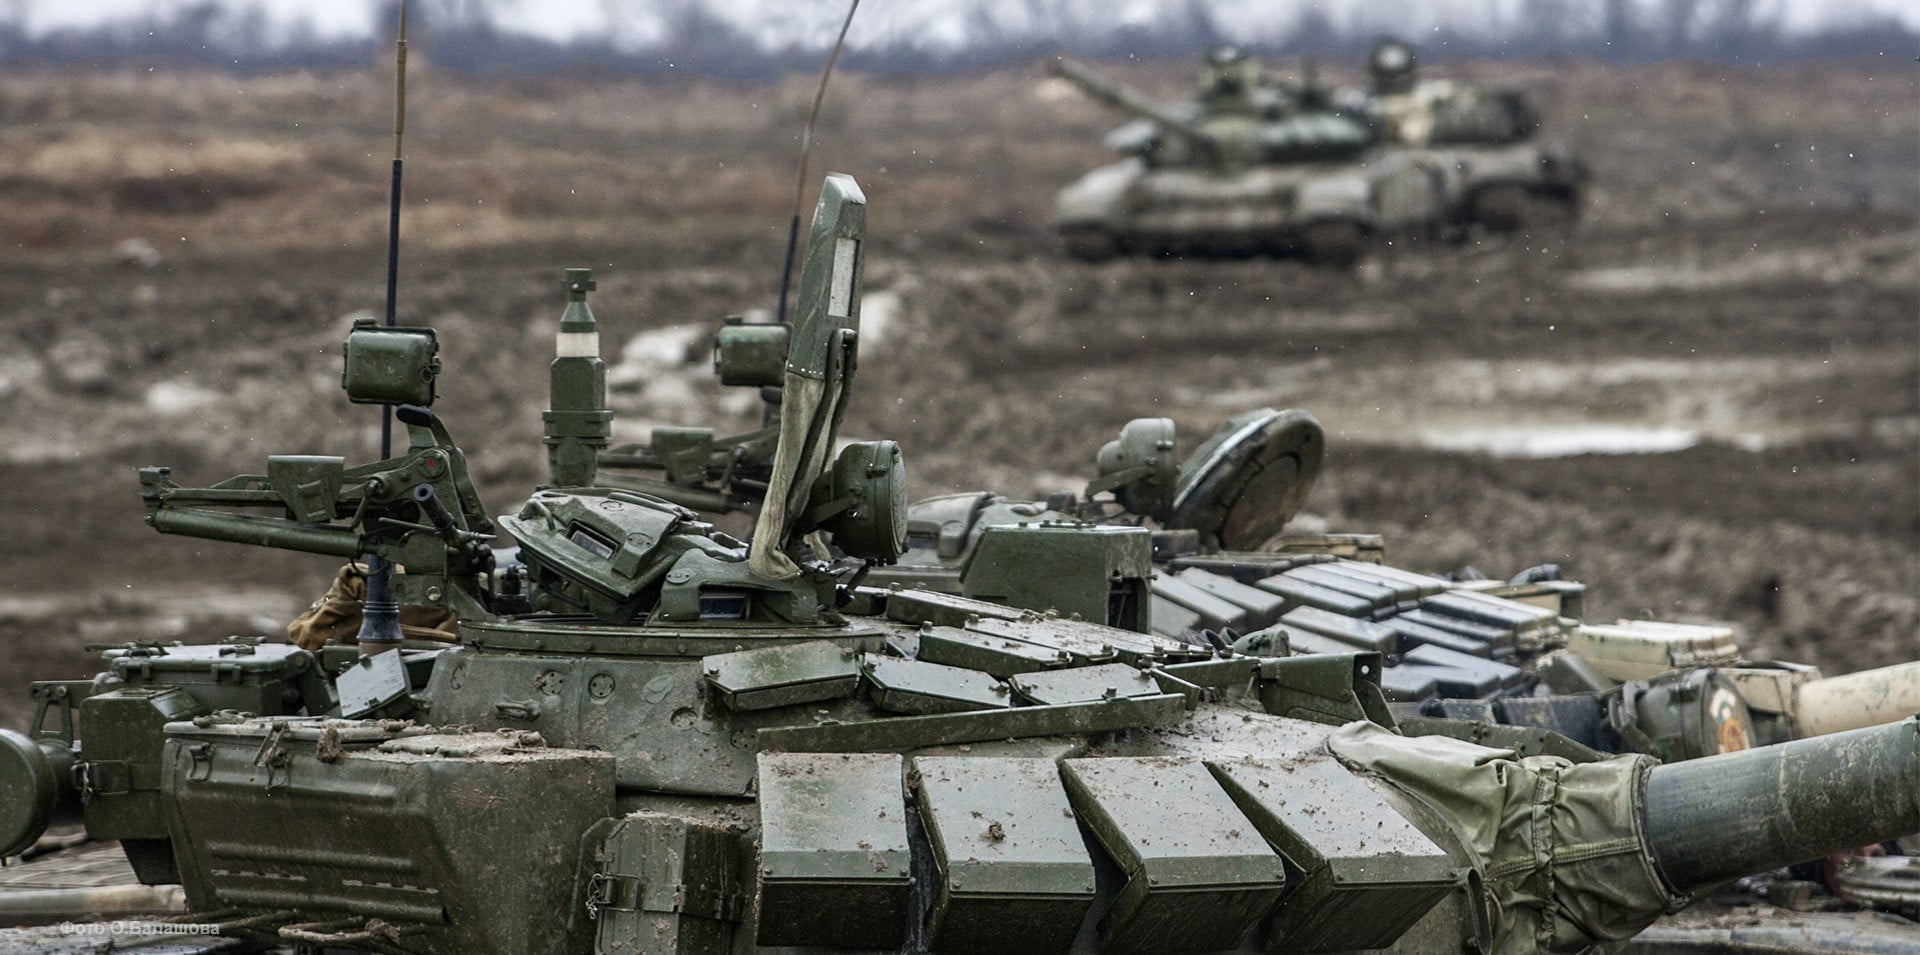 gray metal battle tank, military, tank, Russian Army, mud